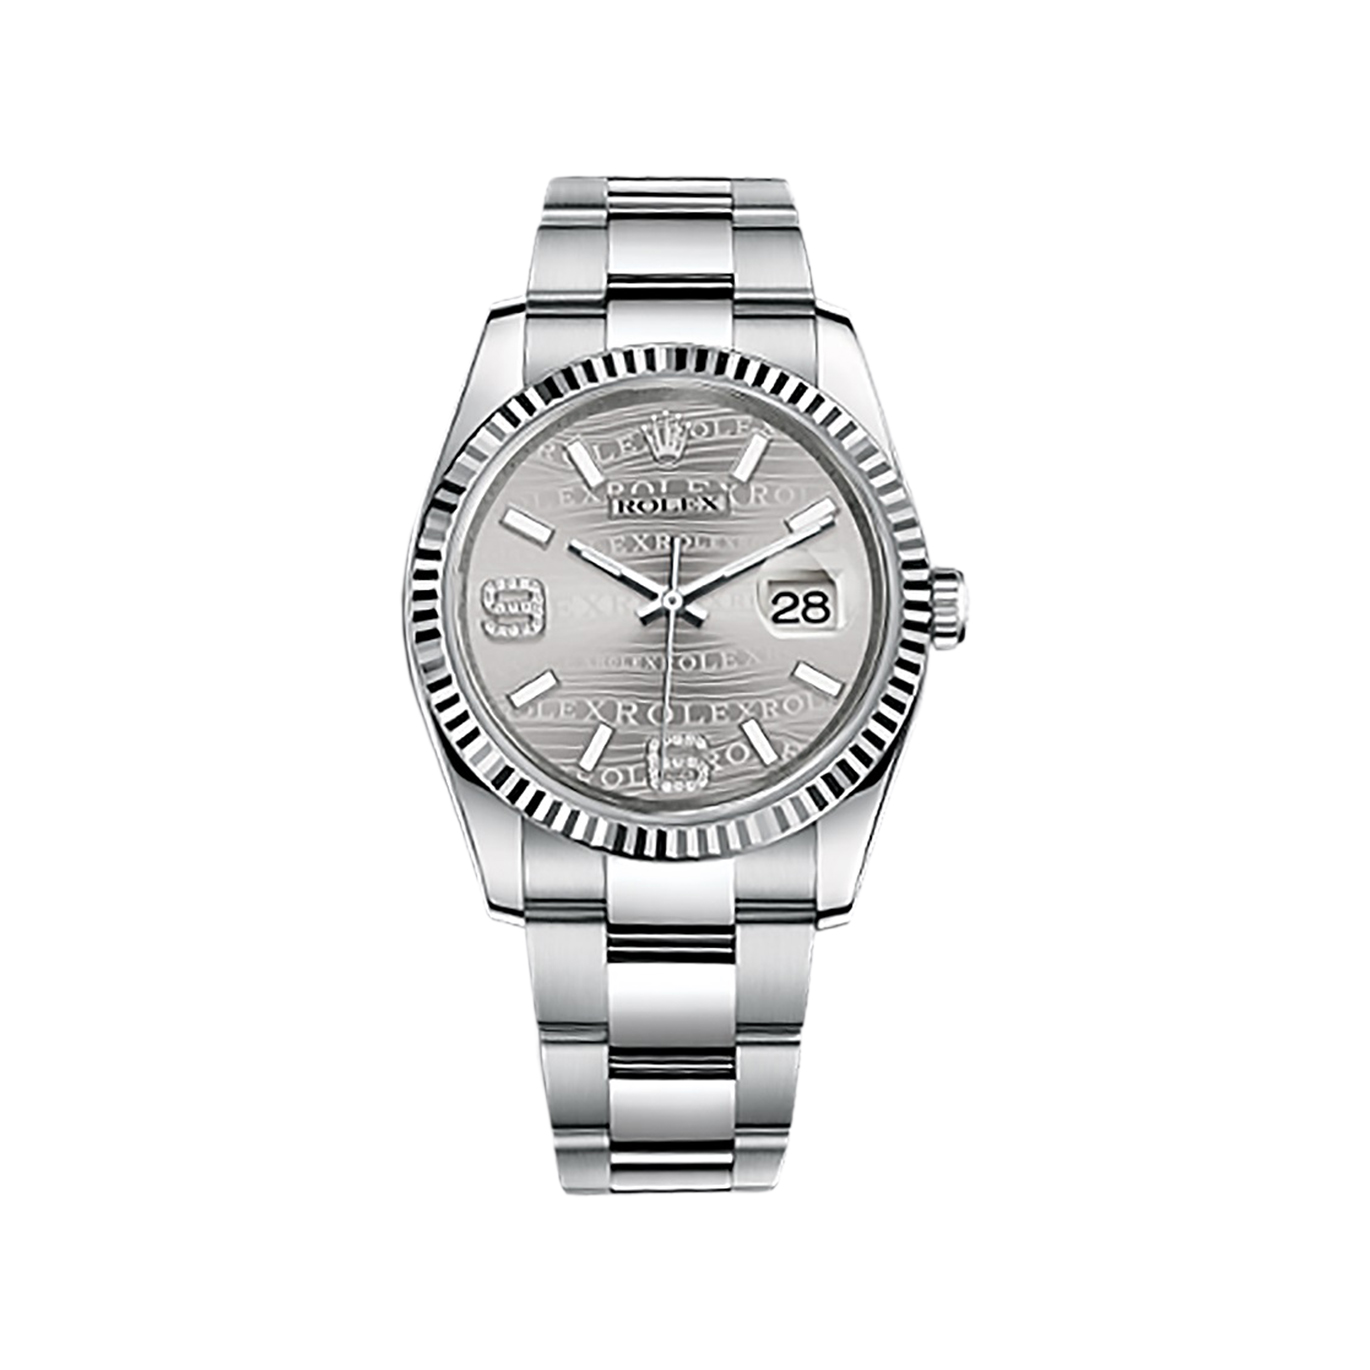 Datejust 36 116234 White Gold & Stainless Steel Watch (Rhodium Waves)